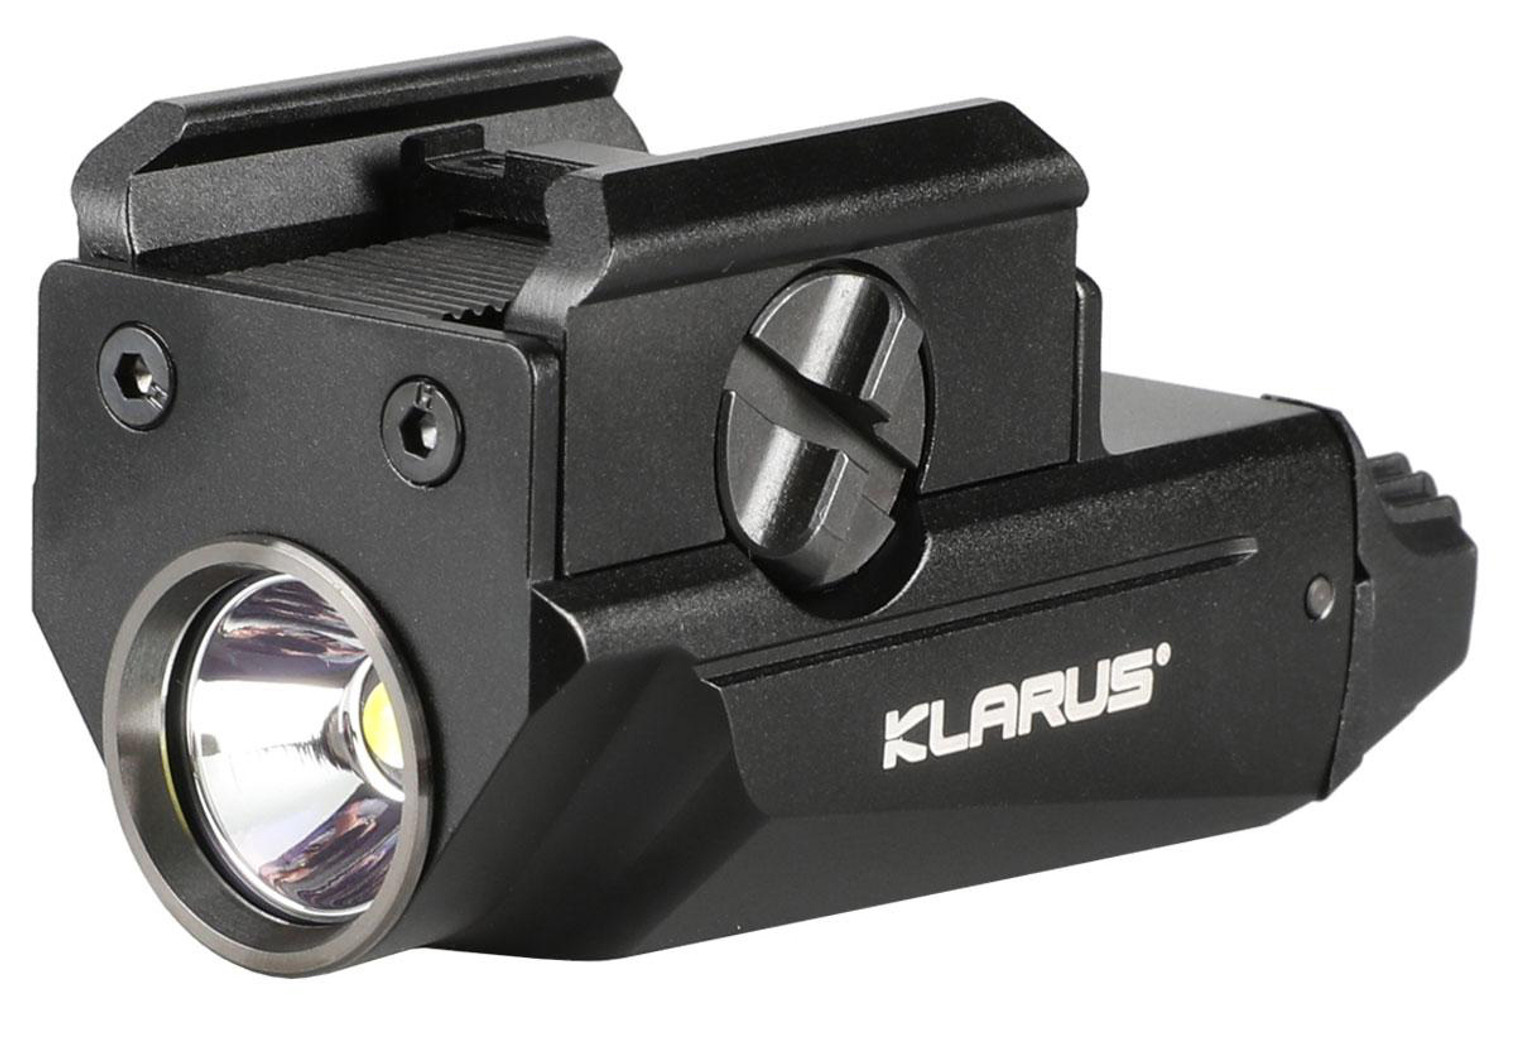 Matrix x Klarus GL1 600 Lumen Rail Mounted USB Rechargeable Compact Pistol Light